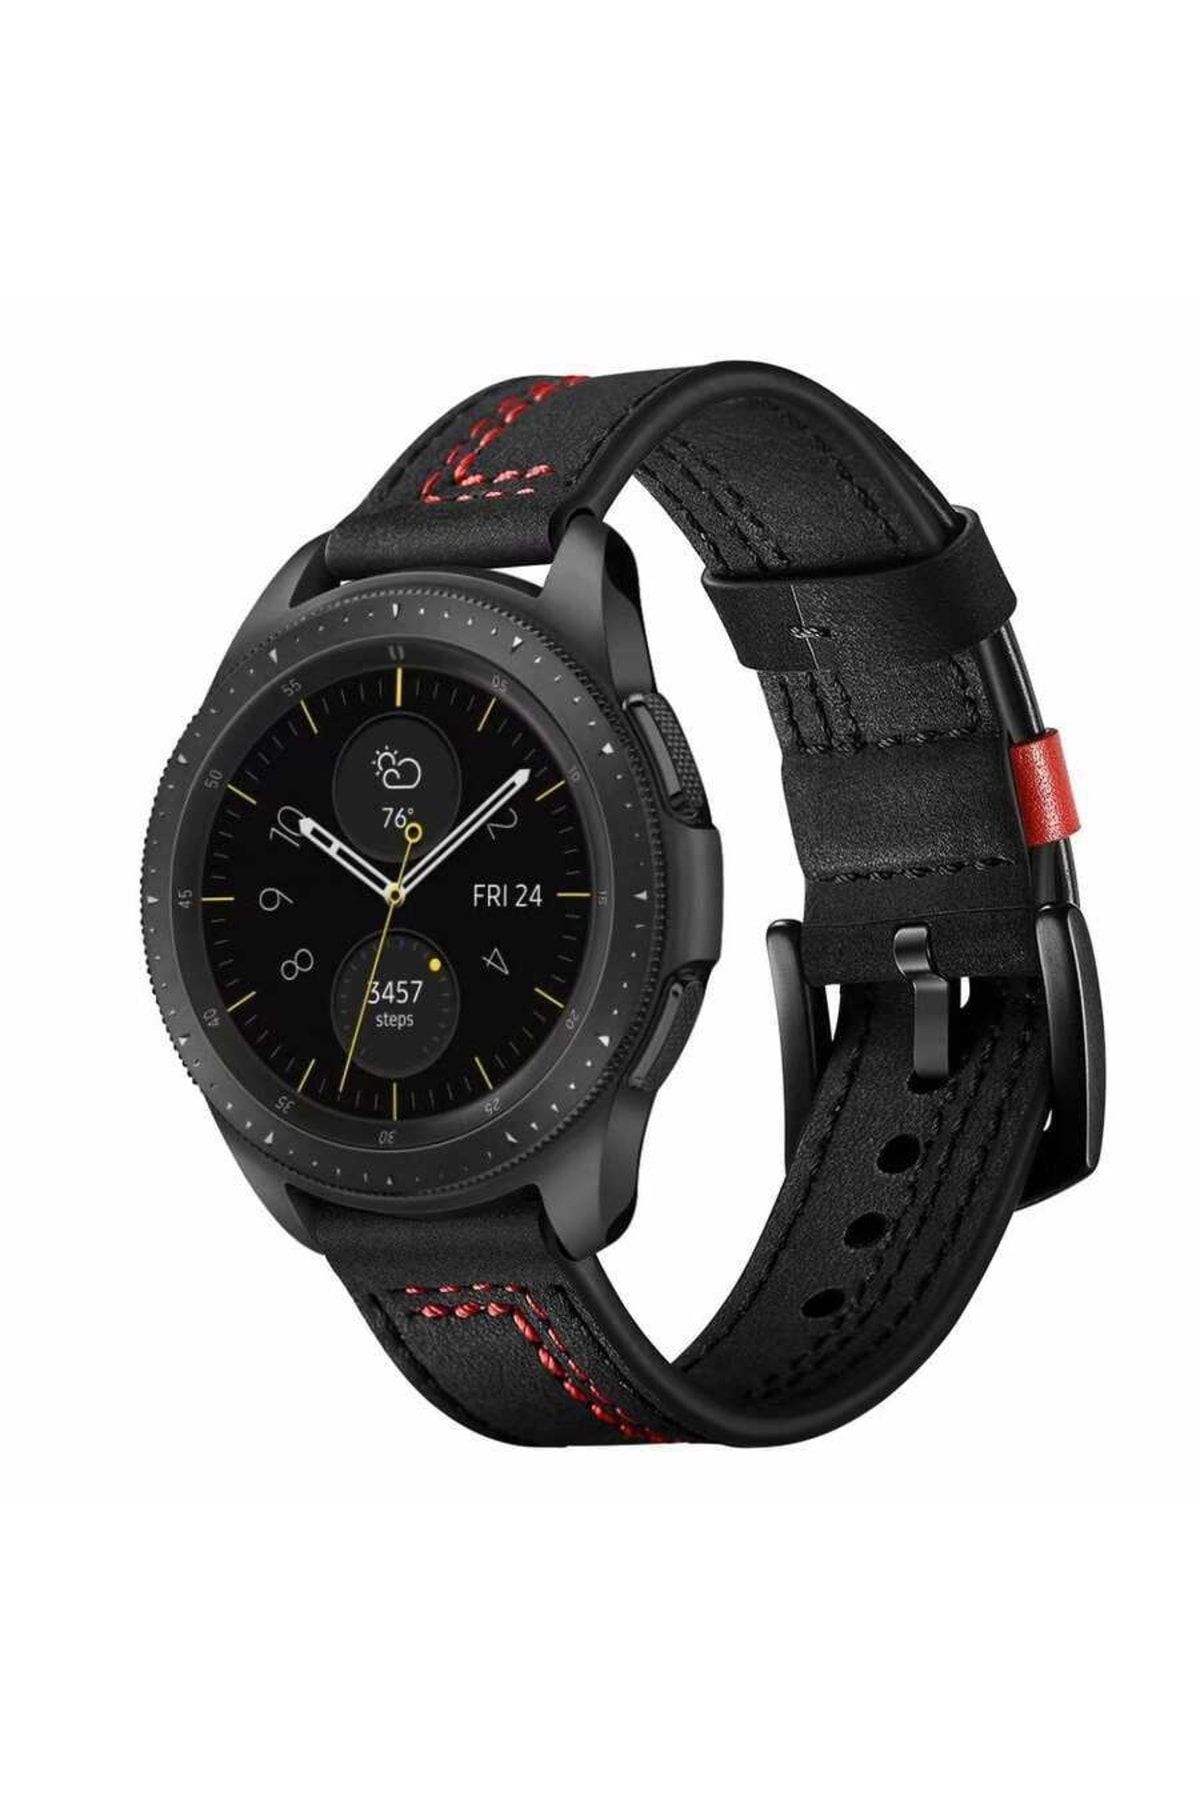 Fibaks Samsung Galaxy Watch 46mm (22MM) Krd-19 Akıllı Saat Kordonu Deri Kordon Kayış Bileklik